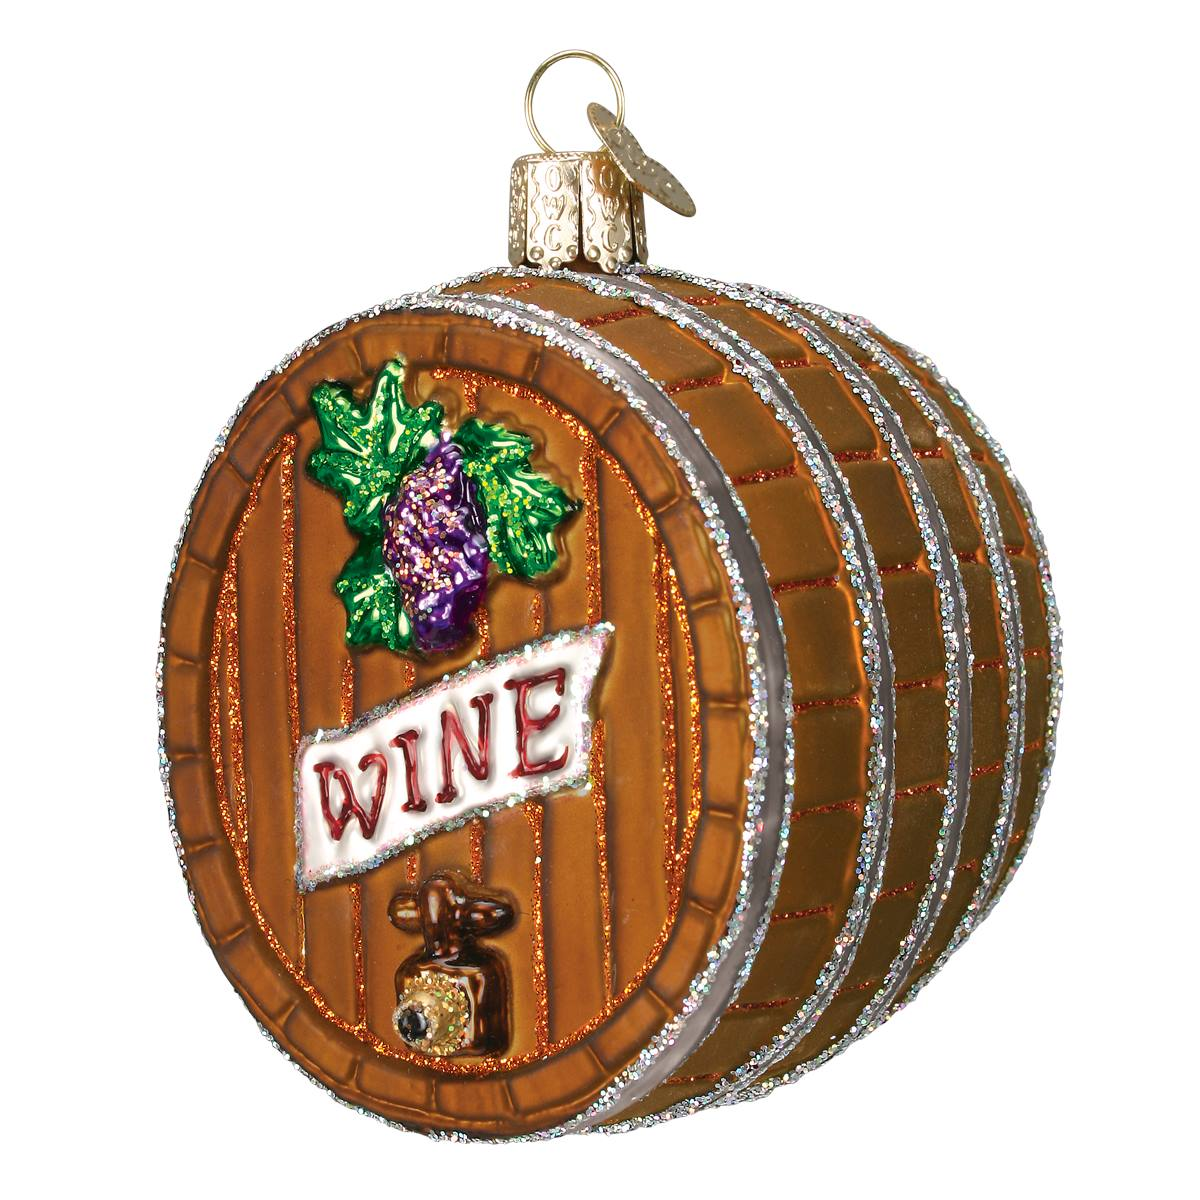 Wine Barrel Ornament